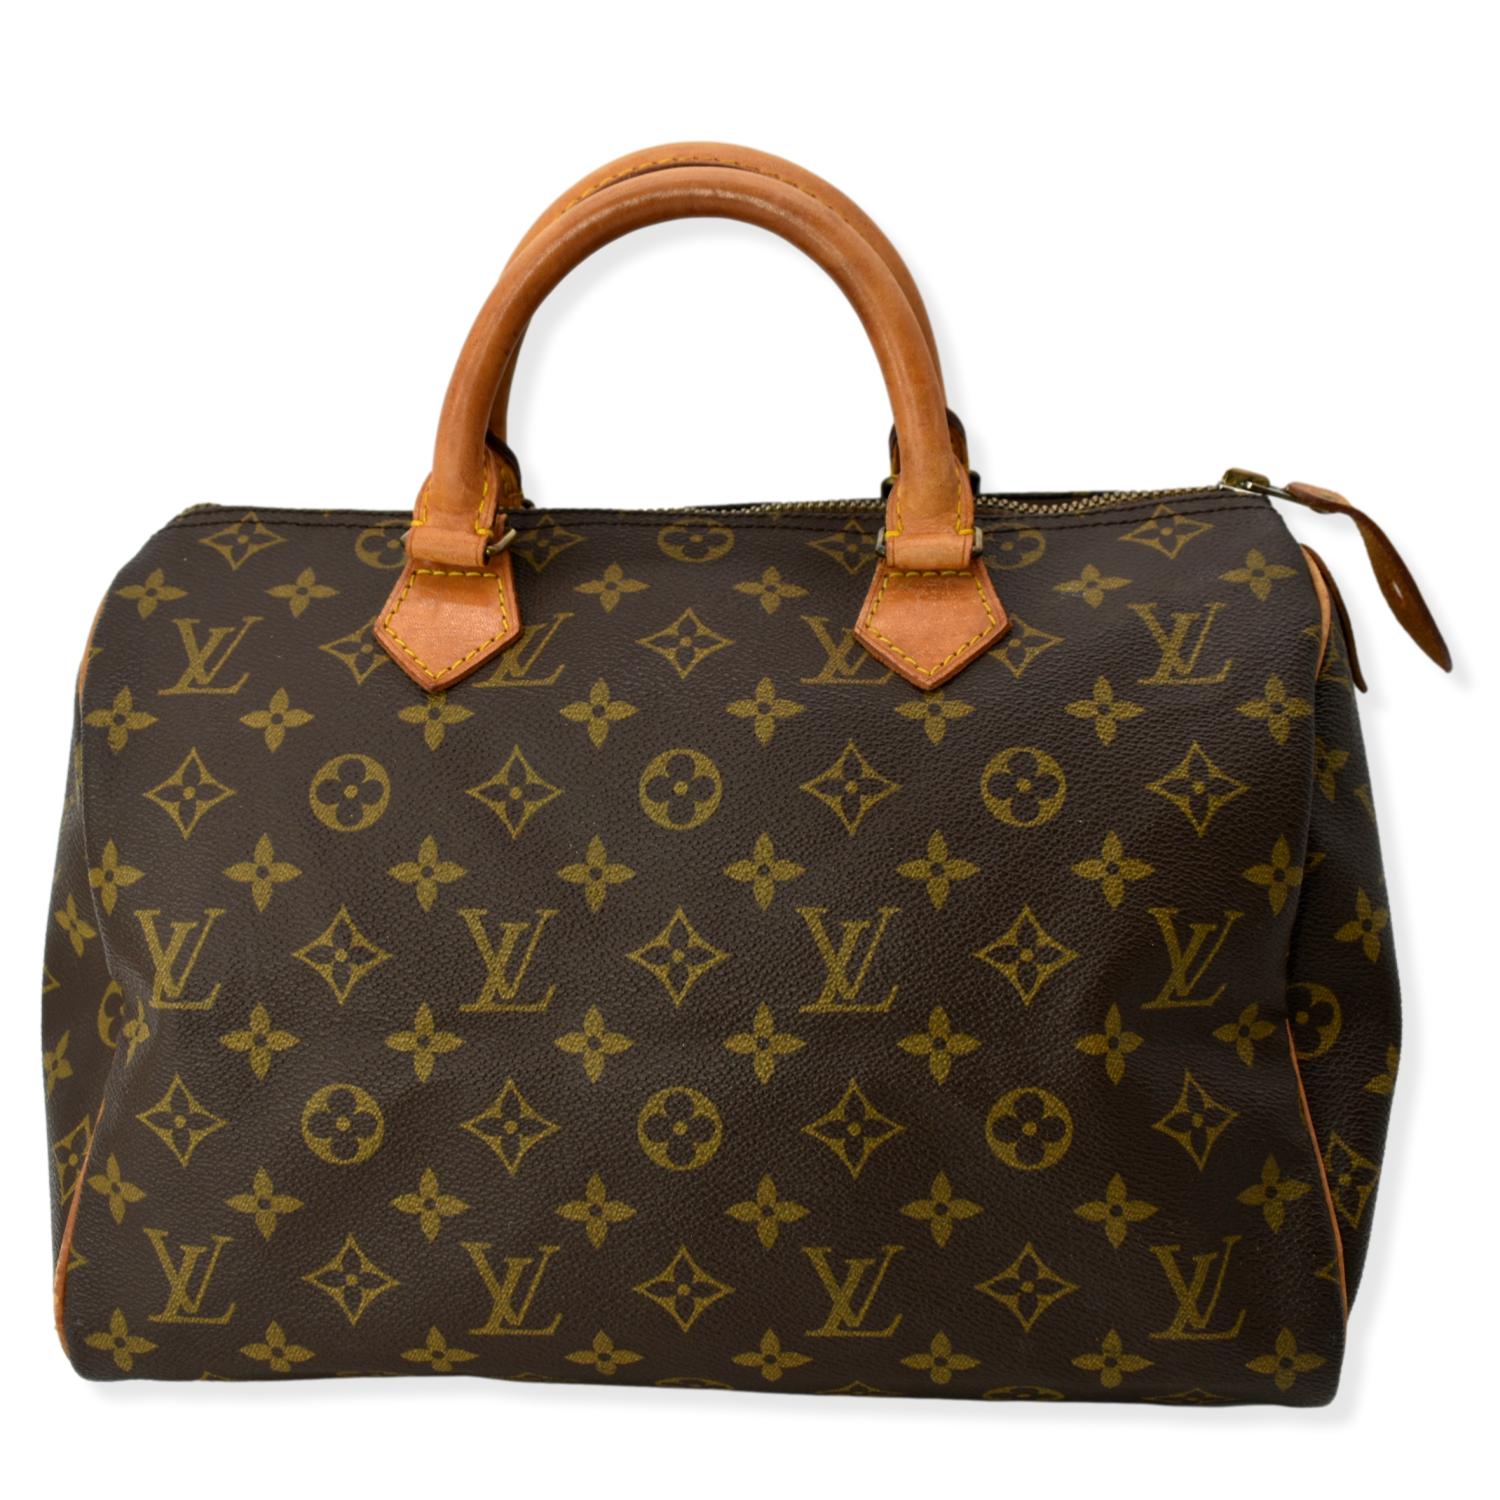 Louis Vuitton 2020 - 58 For Sale on 1stDibs  louis vuitton bags prices 2020,  lv 2020 bags, 2020 louis vuitton bags